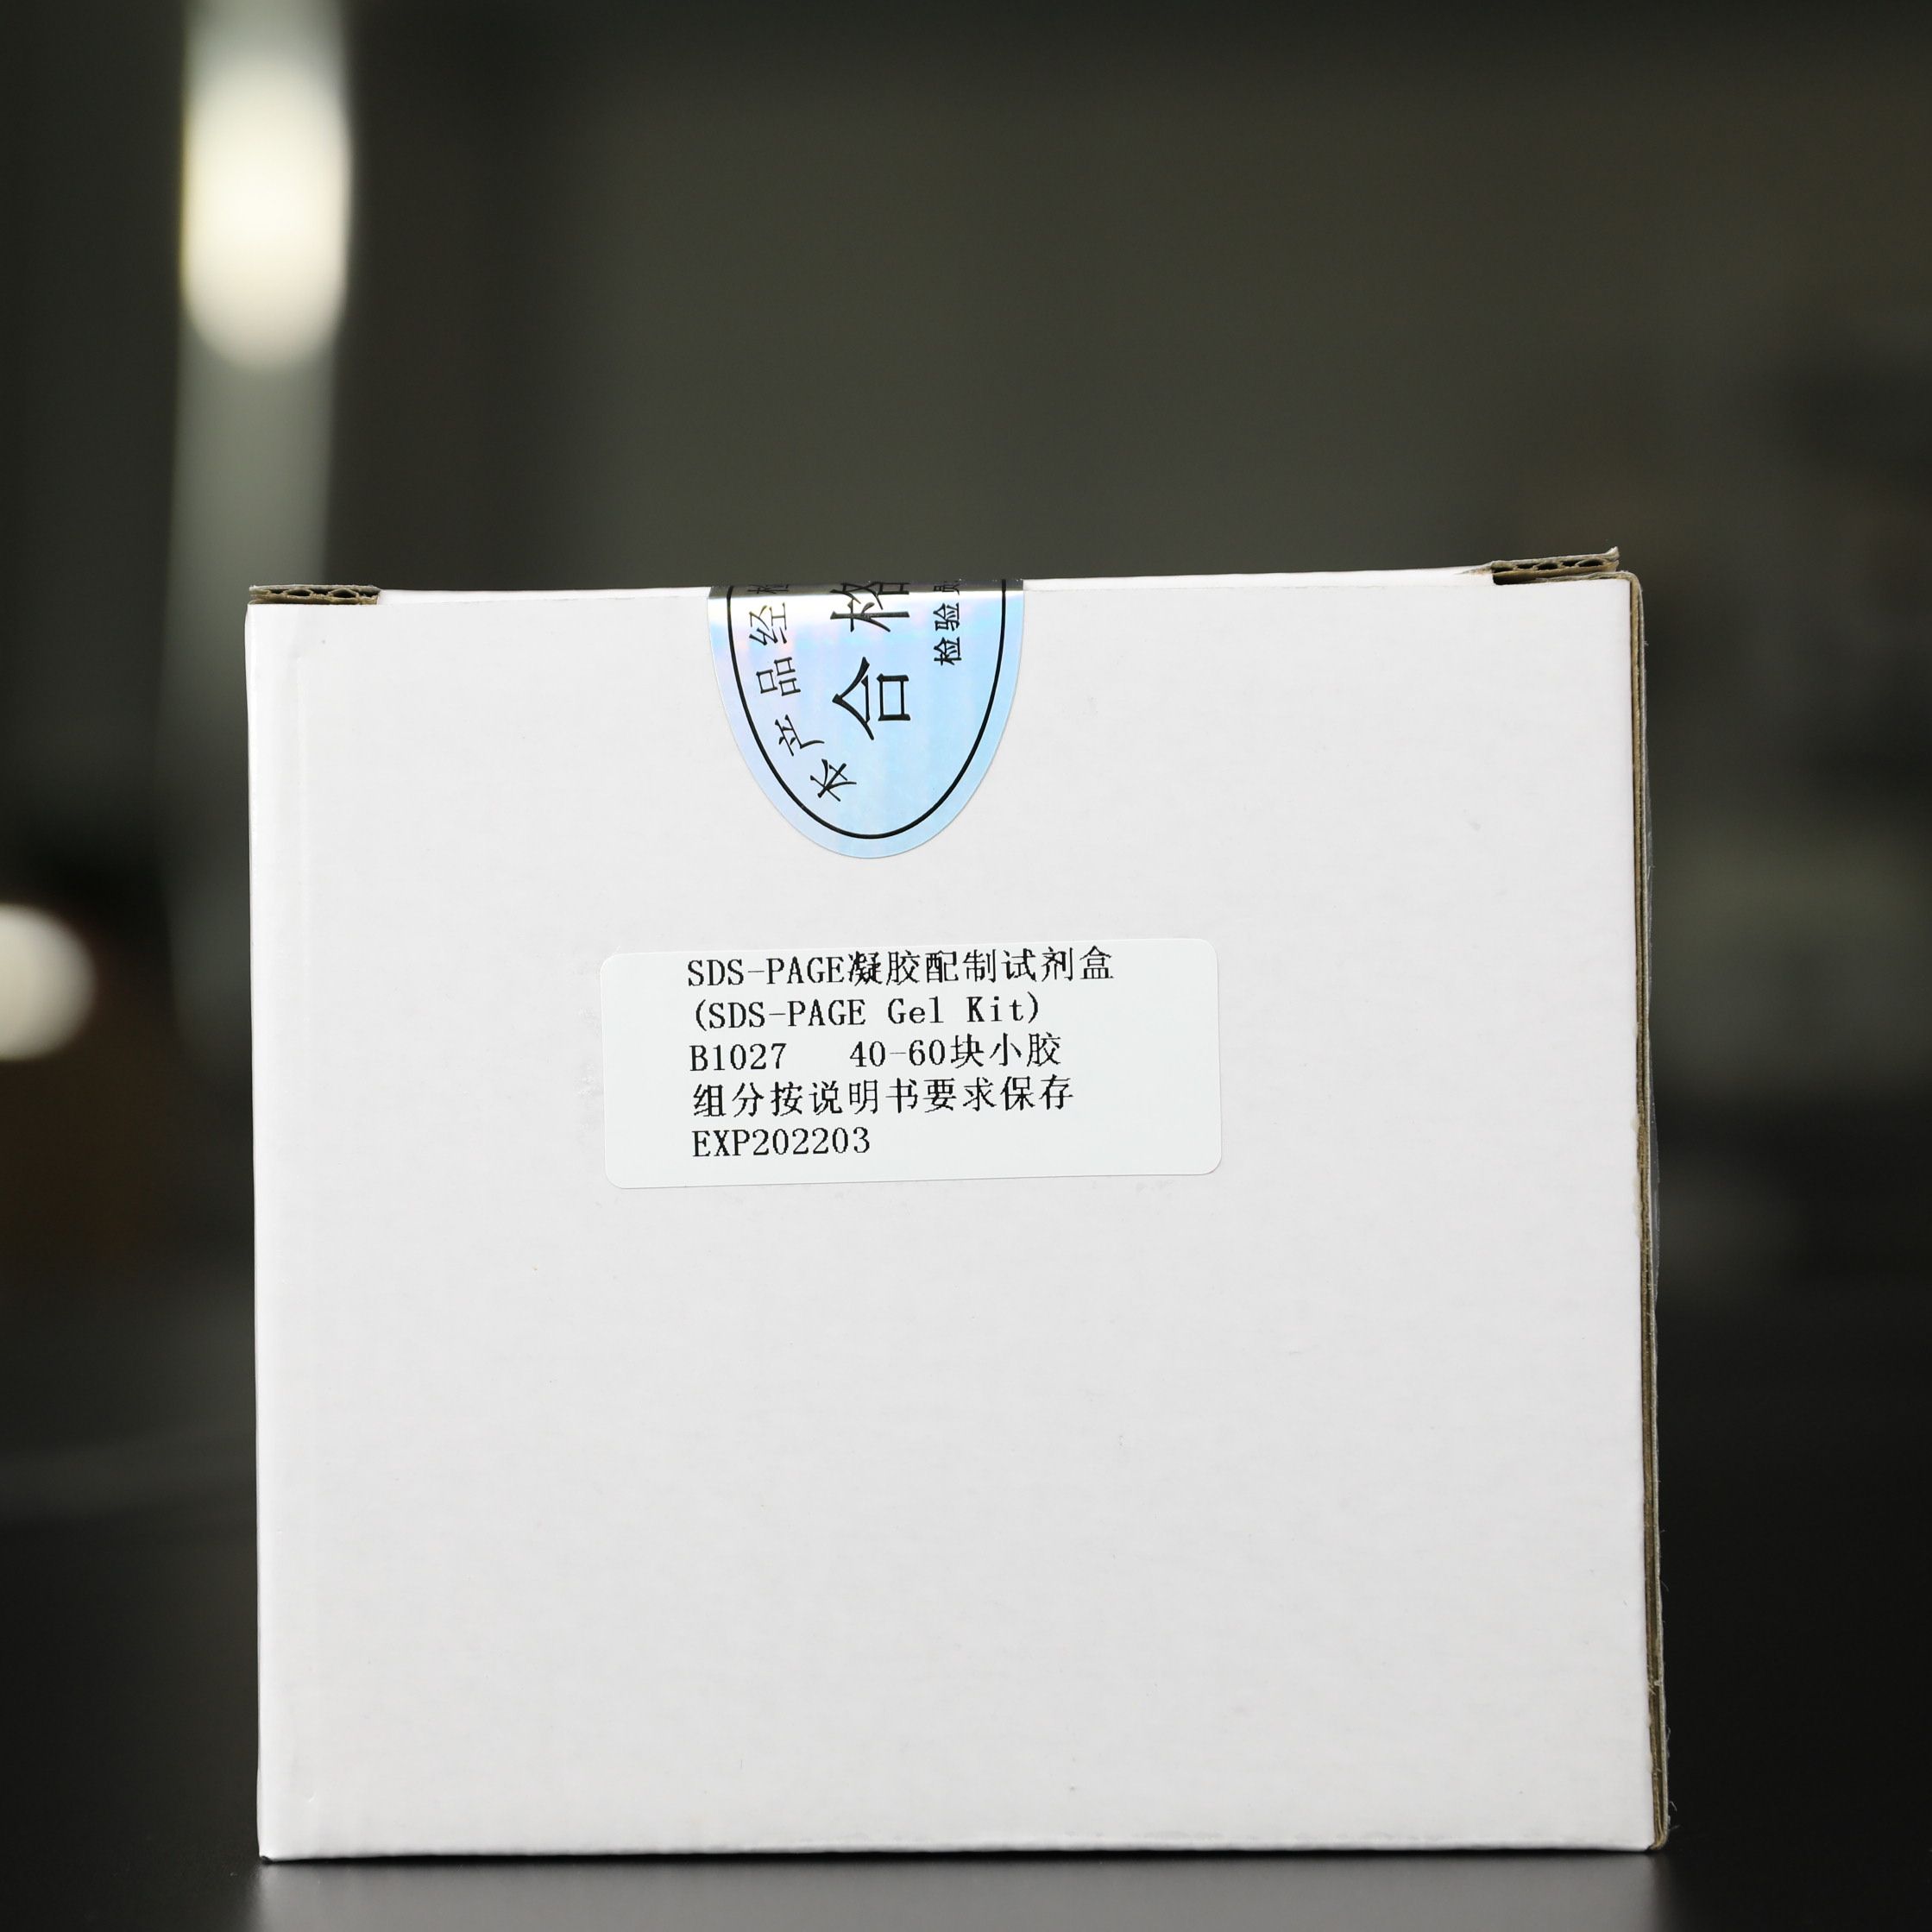 SDS-PAGE凝胶配制试剂盒(SDS-PAGE Gel Kit)   B1027   厂家直销，提供OEM定制服务，大包装更优惠 